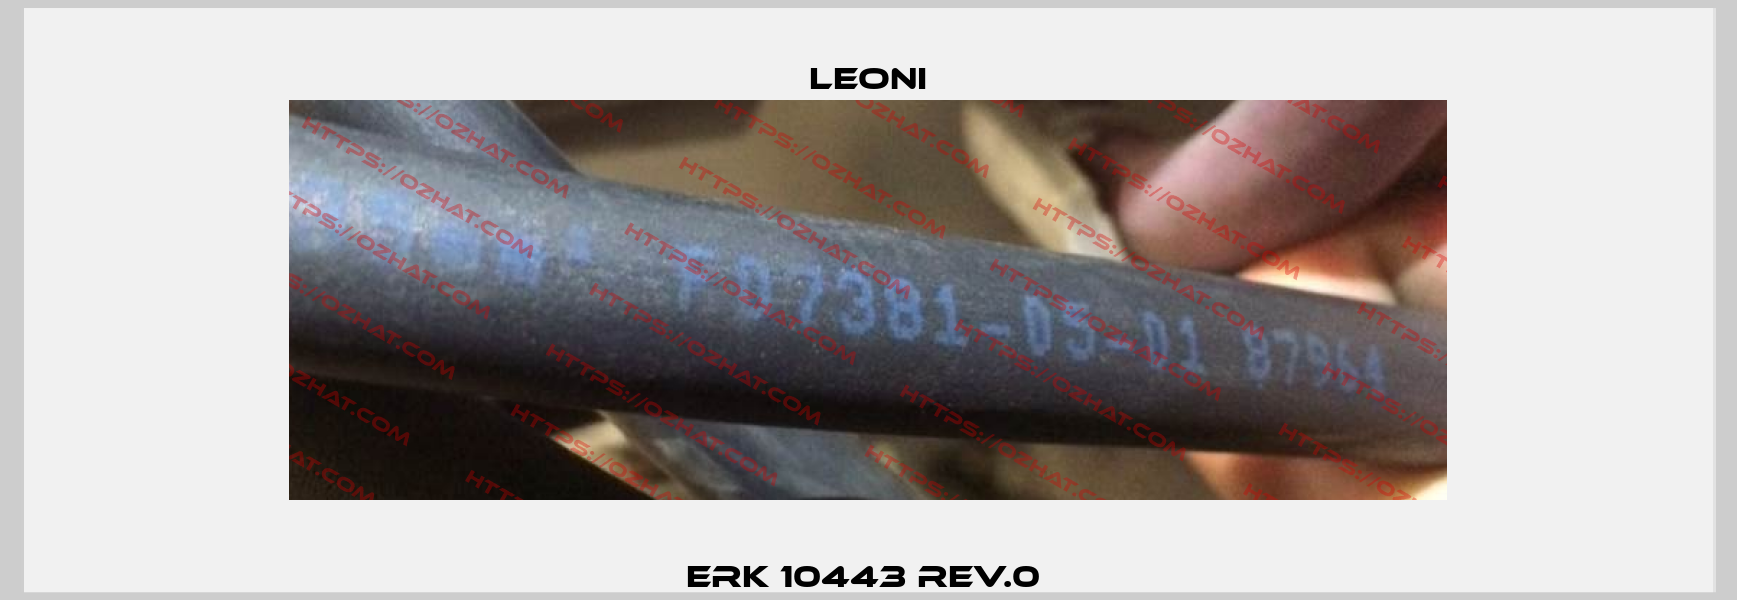 ERK 10443 REV.0  Leoni